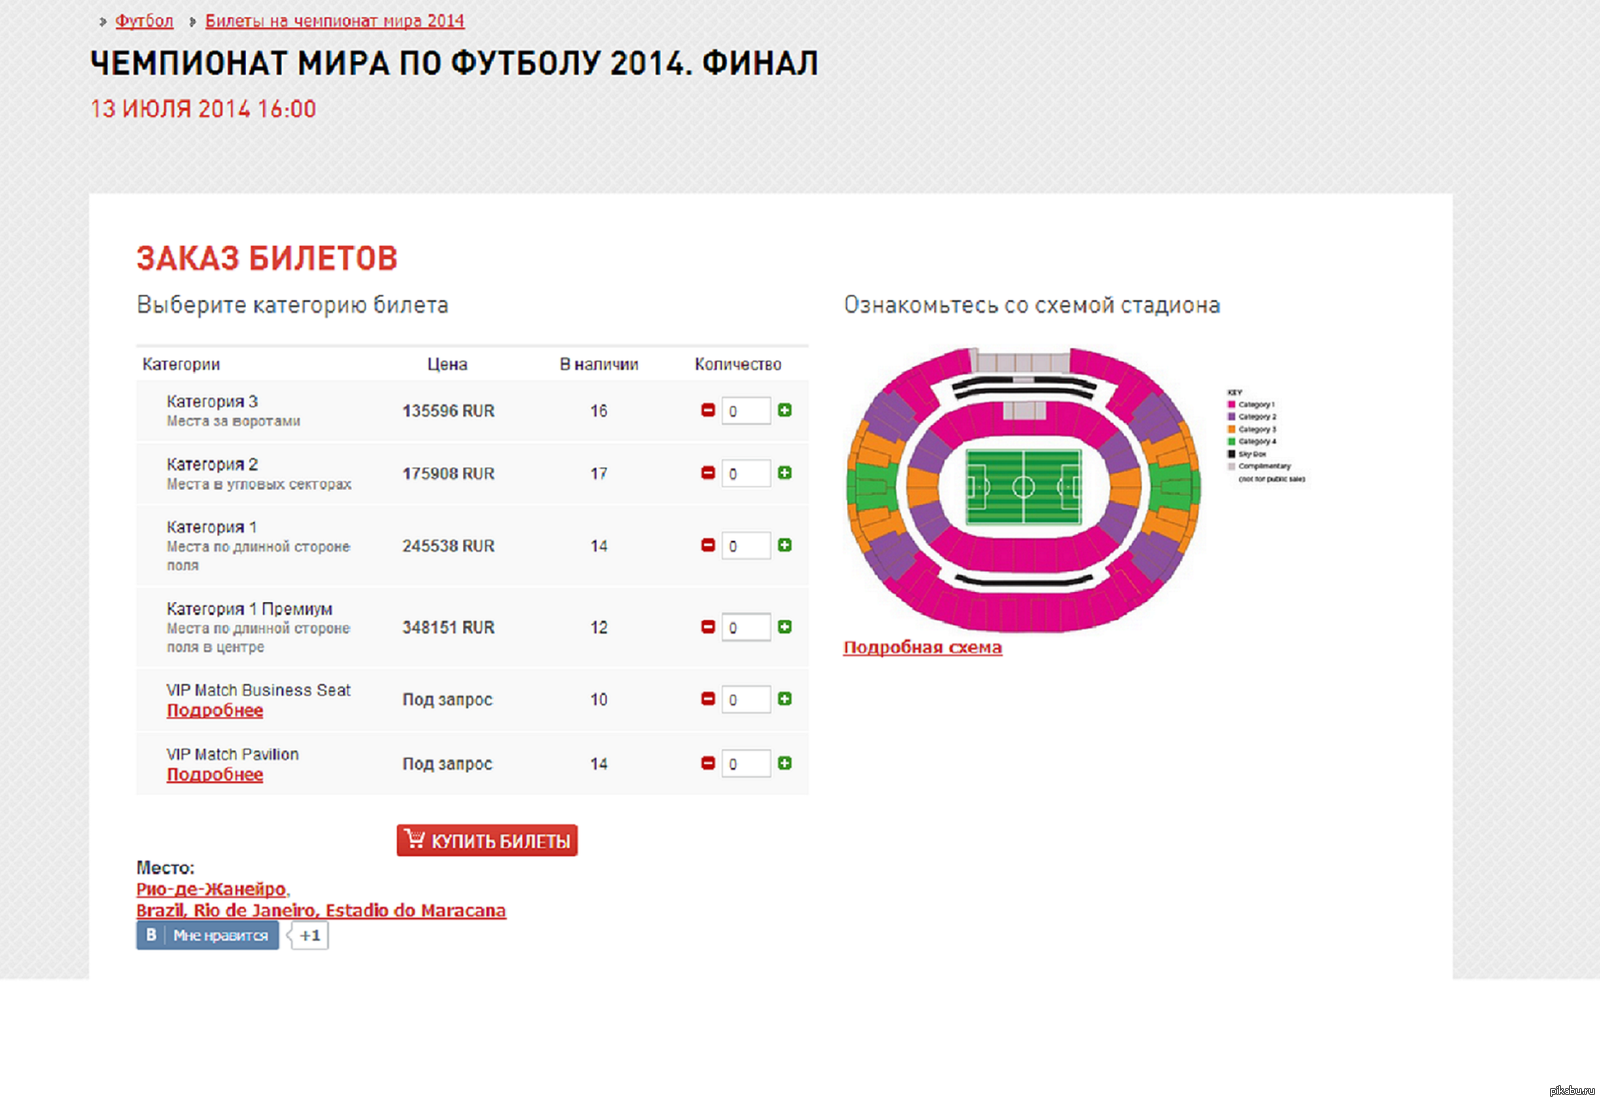 Билет на финал ЧМ по футболу. ЧМ 2014 билеты.